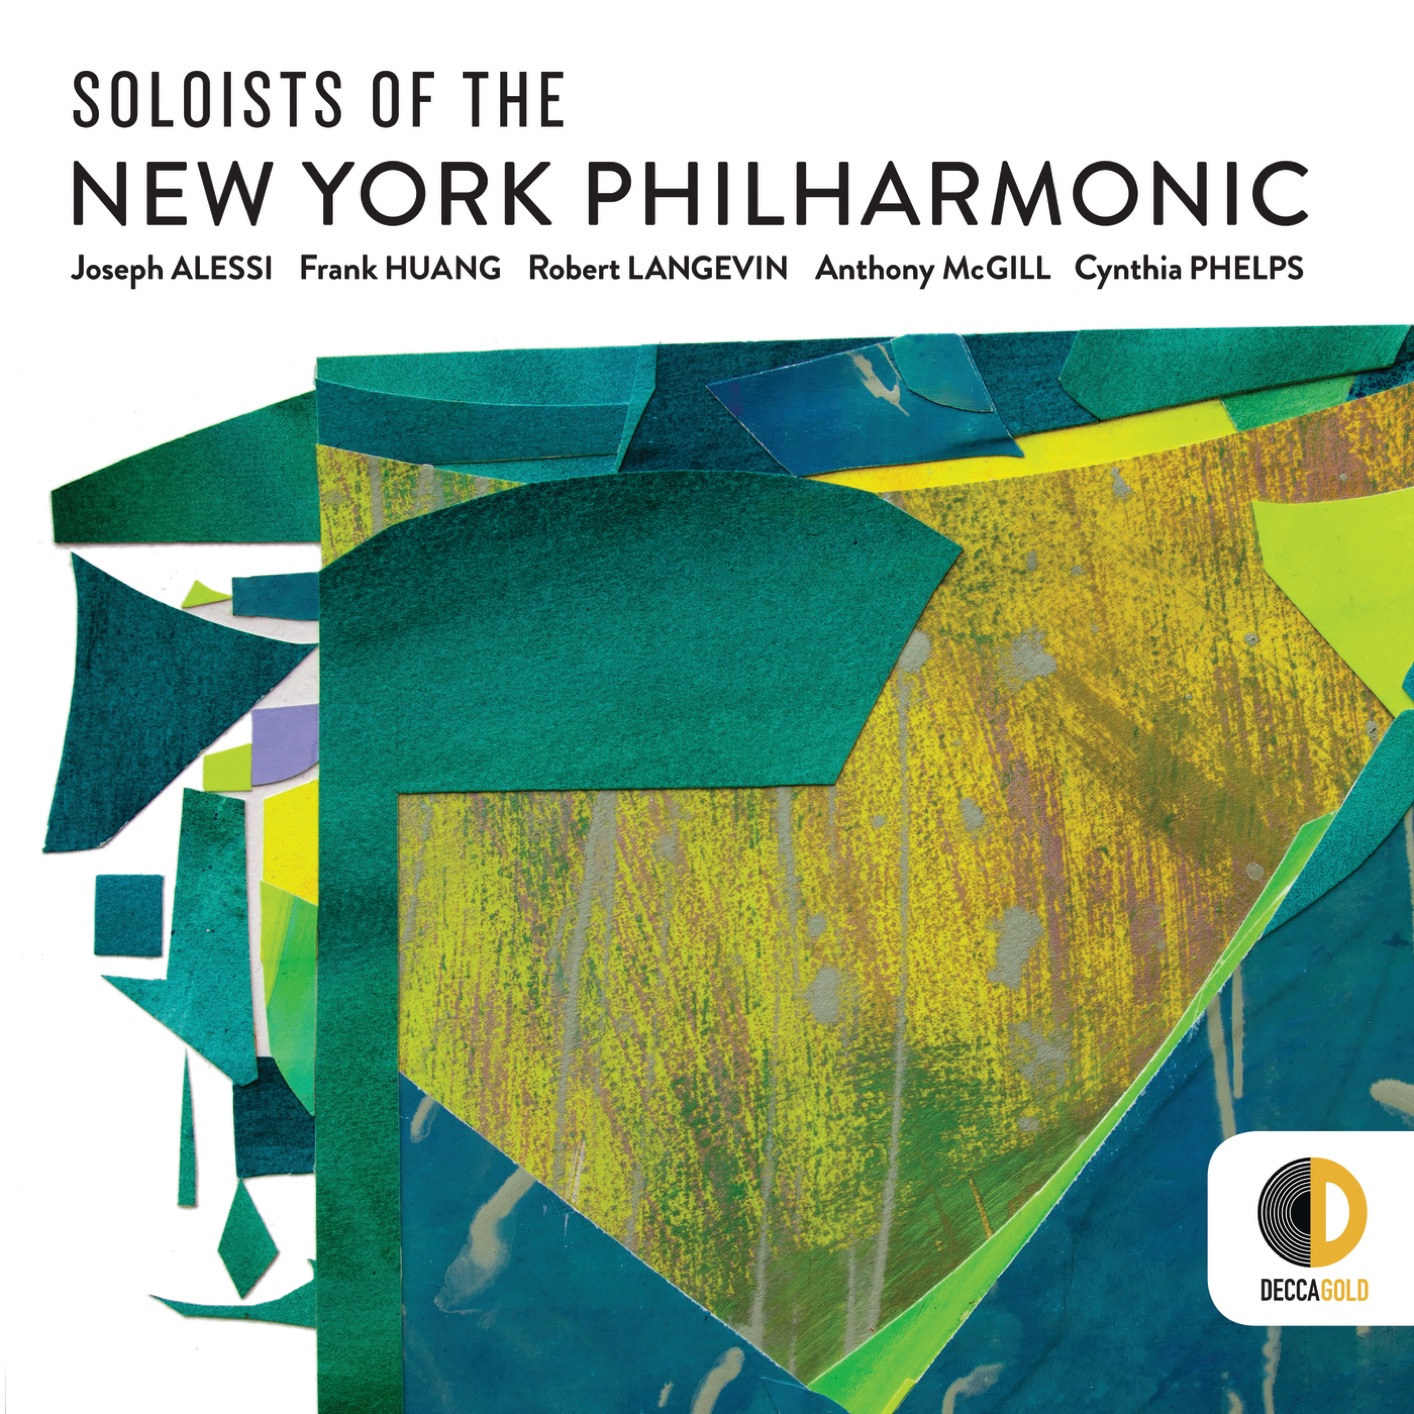 New York Philharmonic - Soloists of the New York Philharmonic (2019) [FLAC 24bit/96kHz]